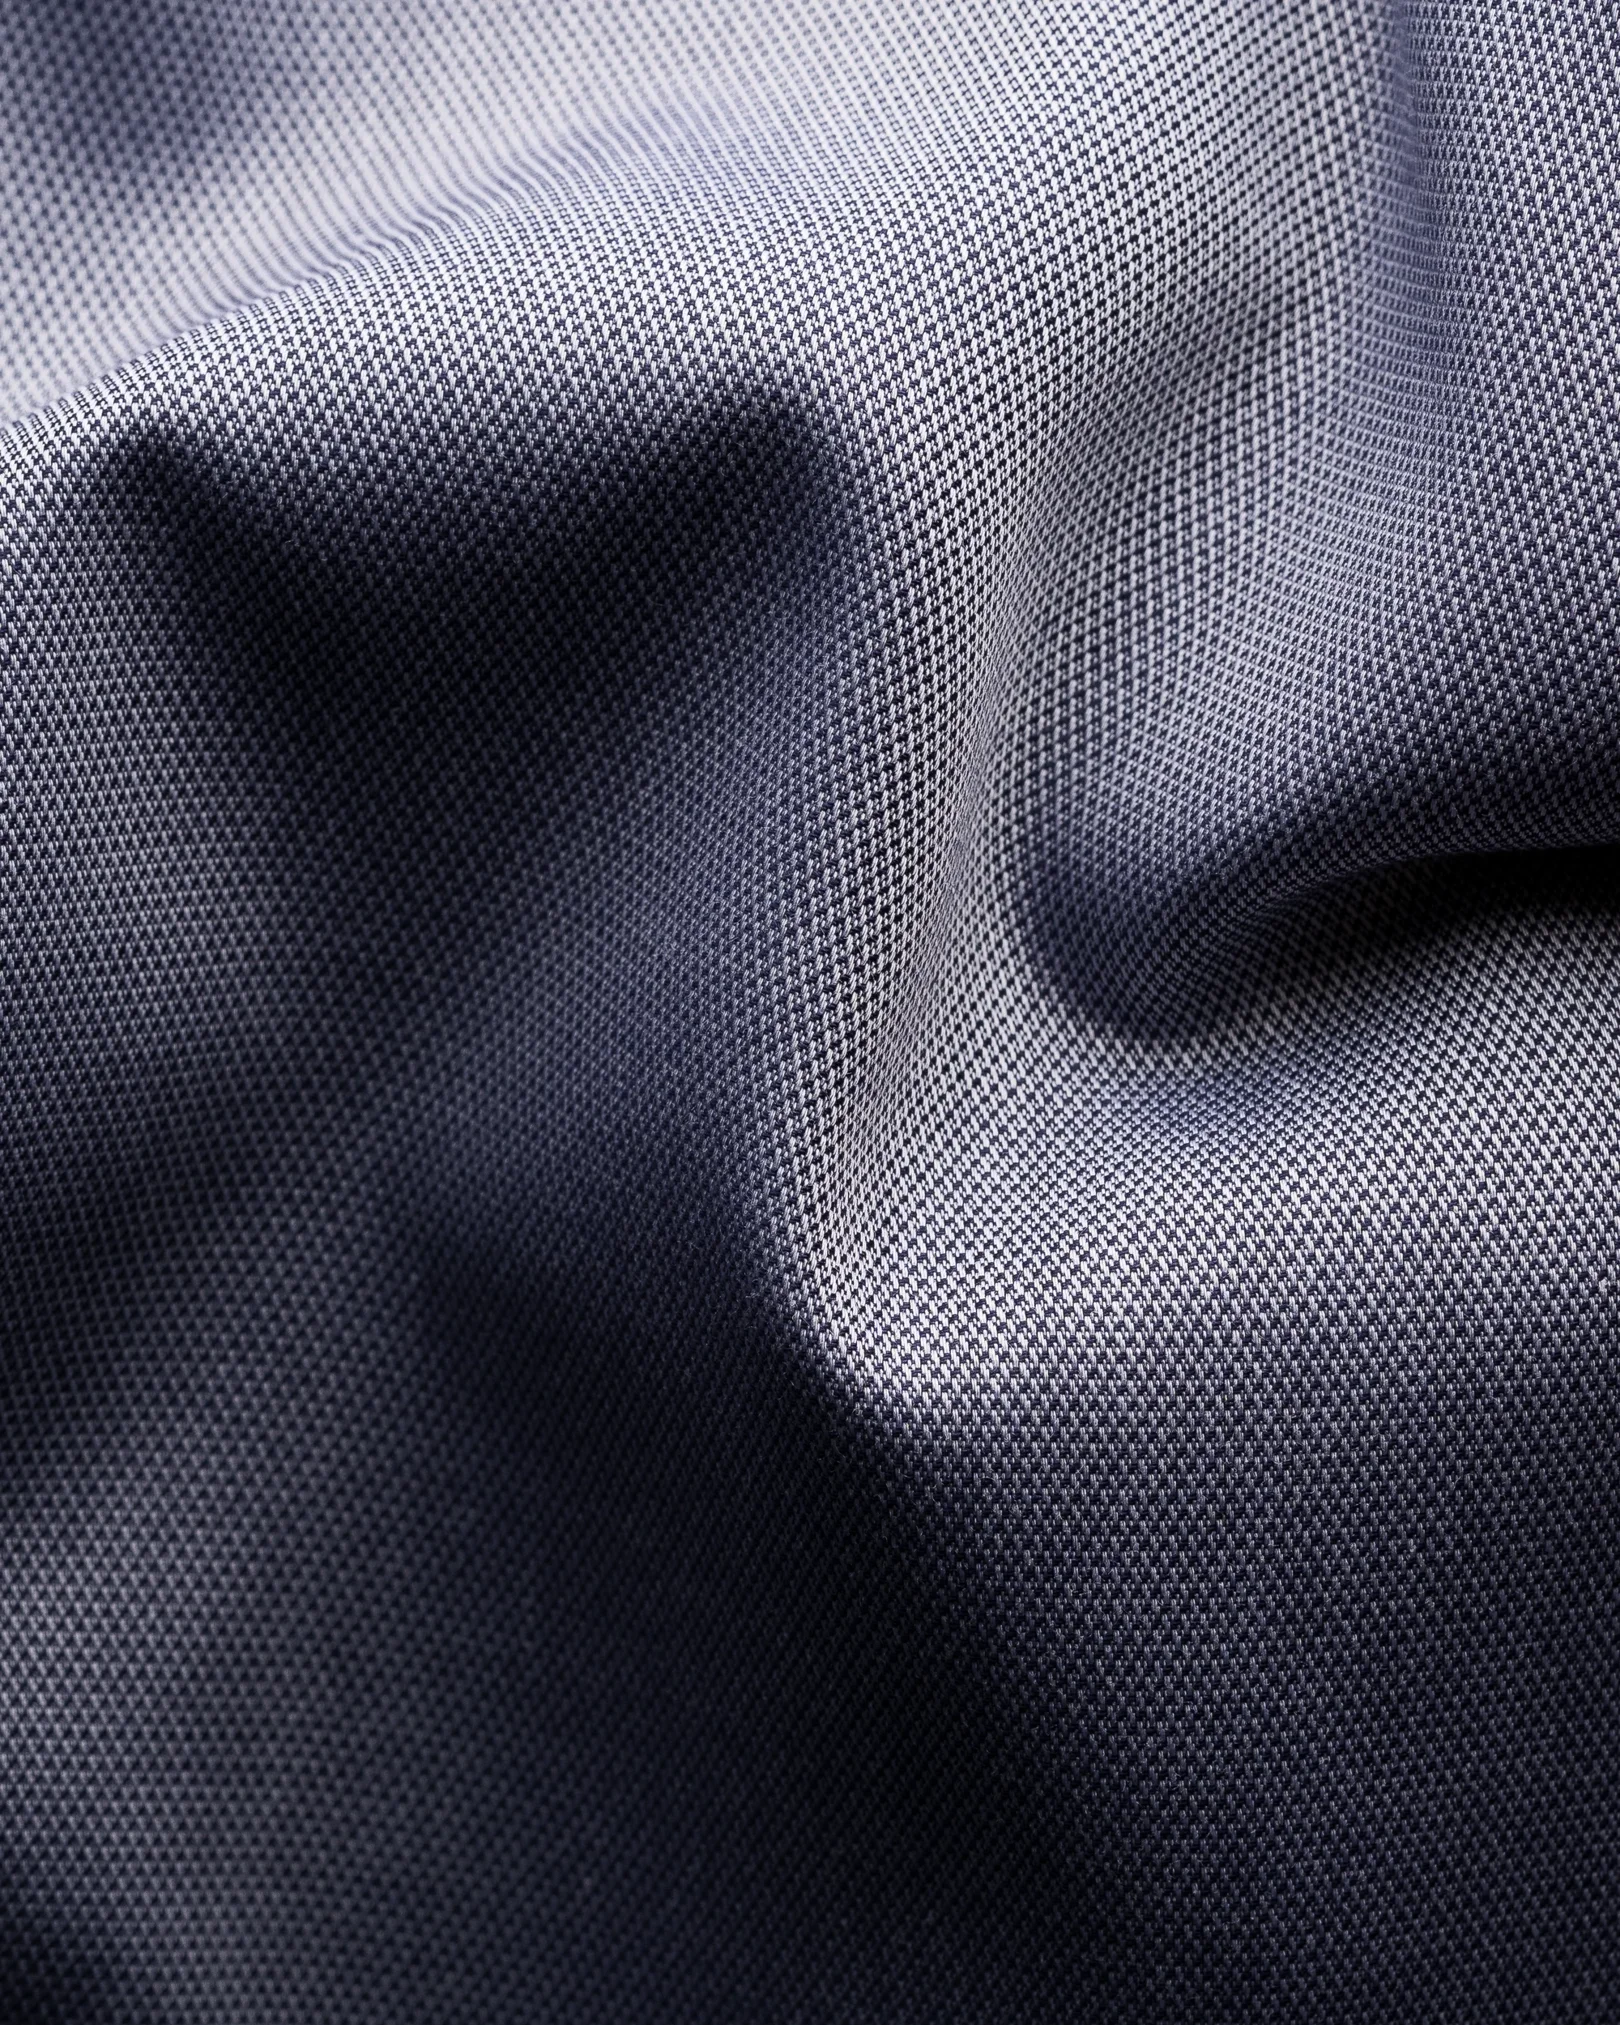 Eton - navy blue twill weave